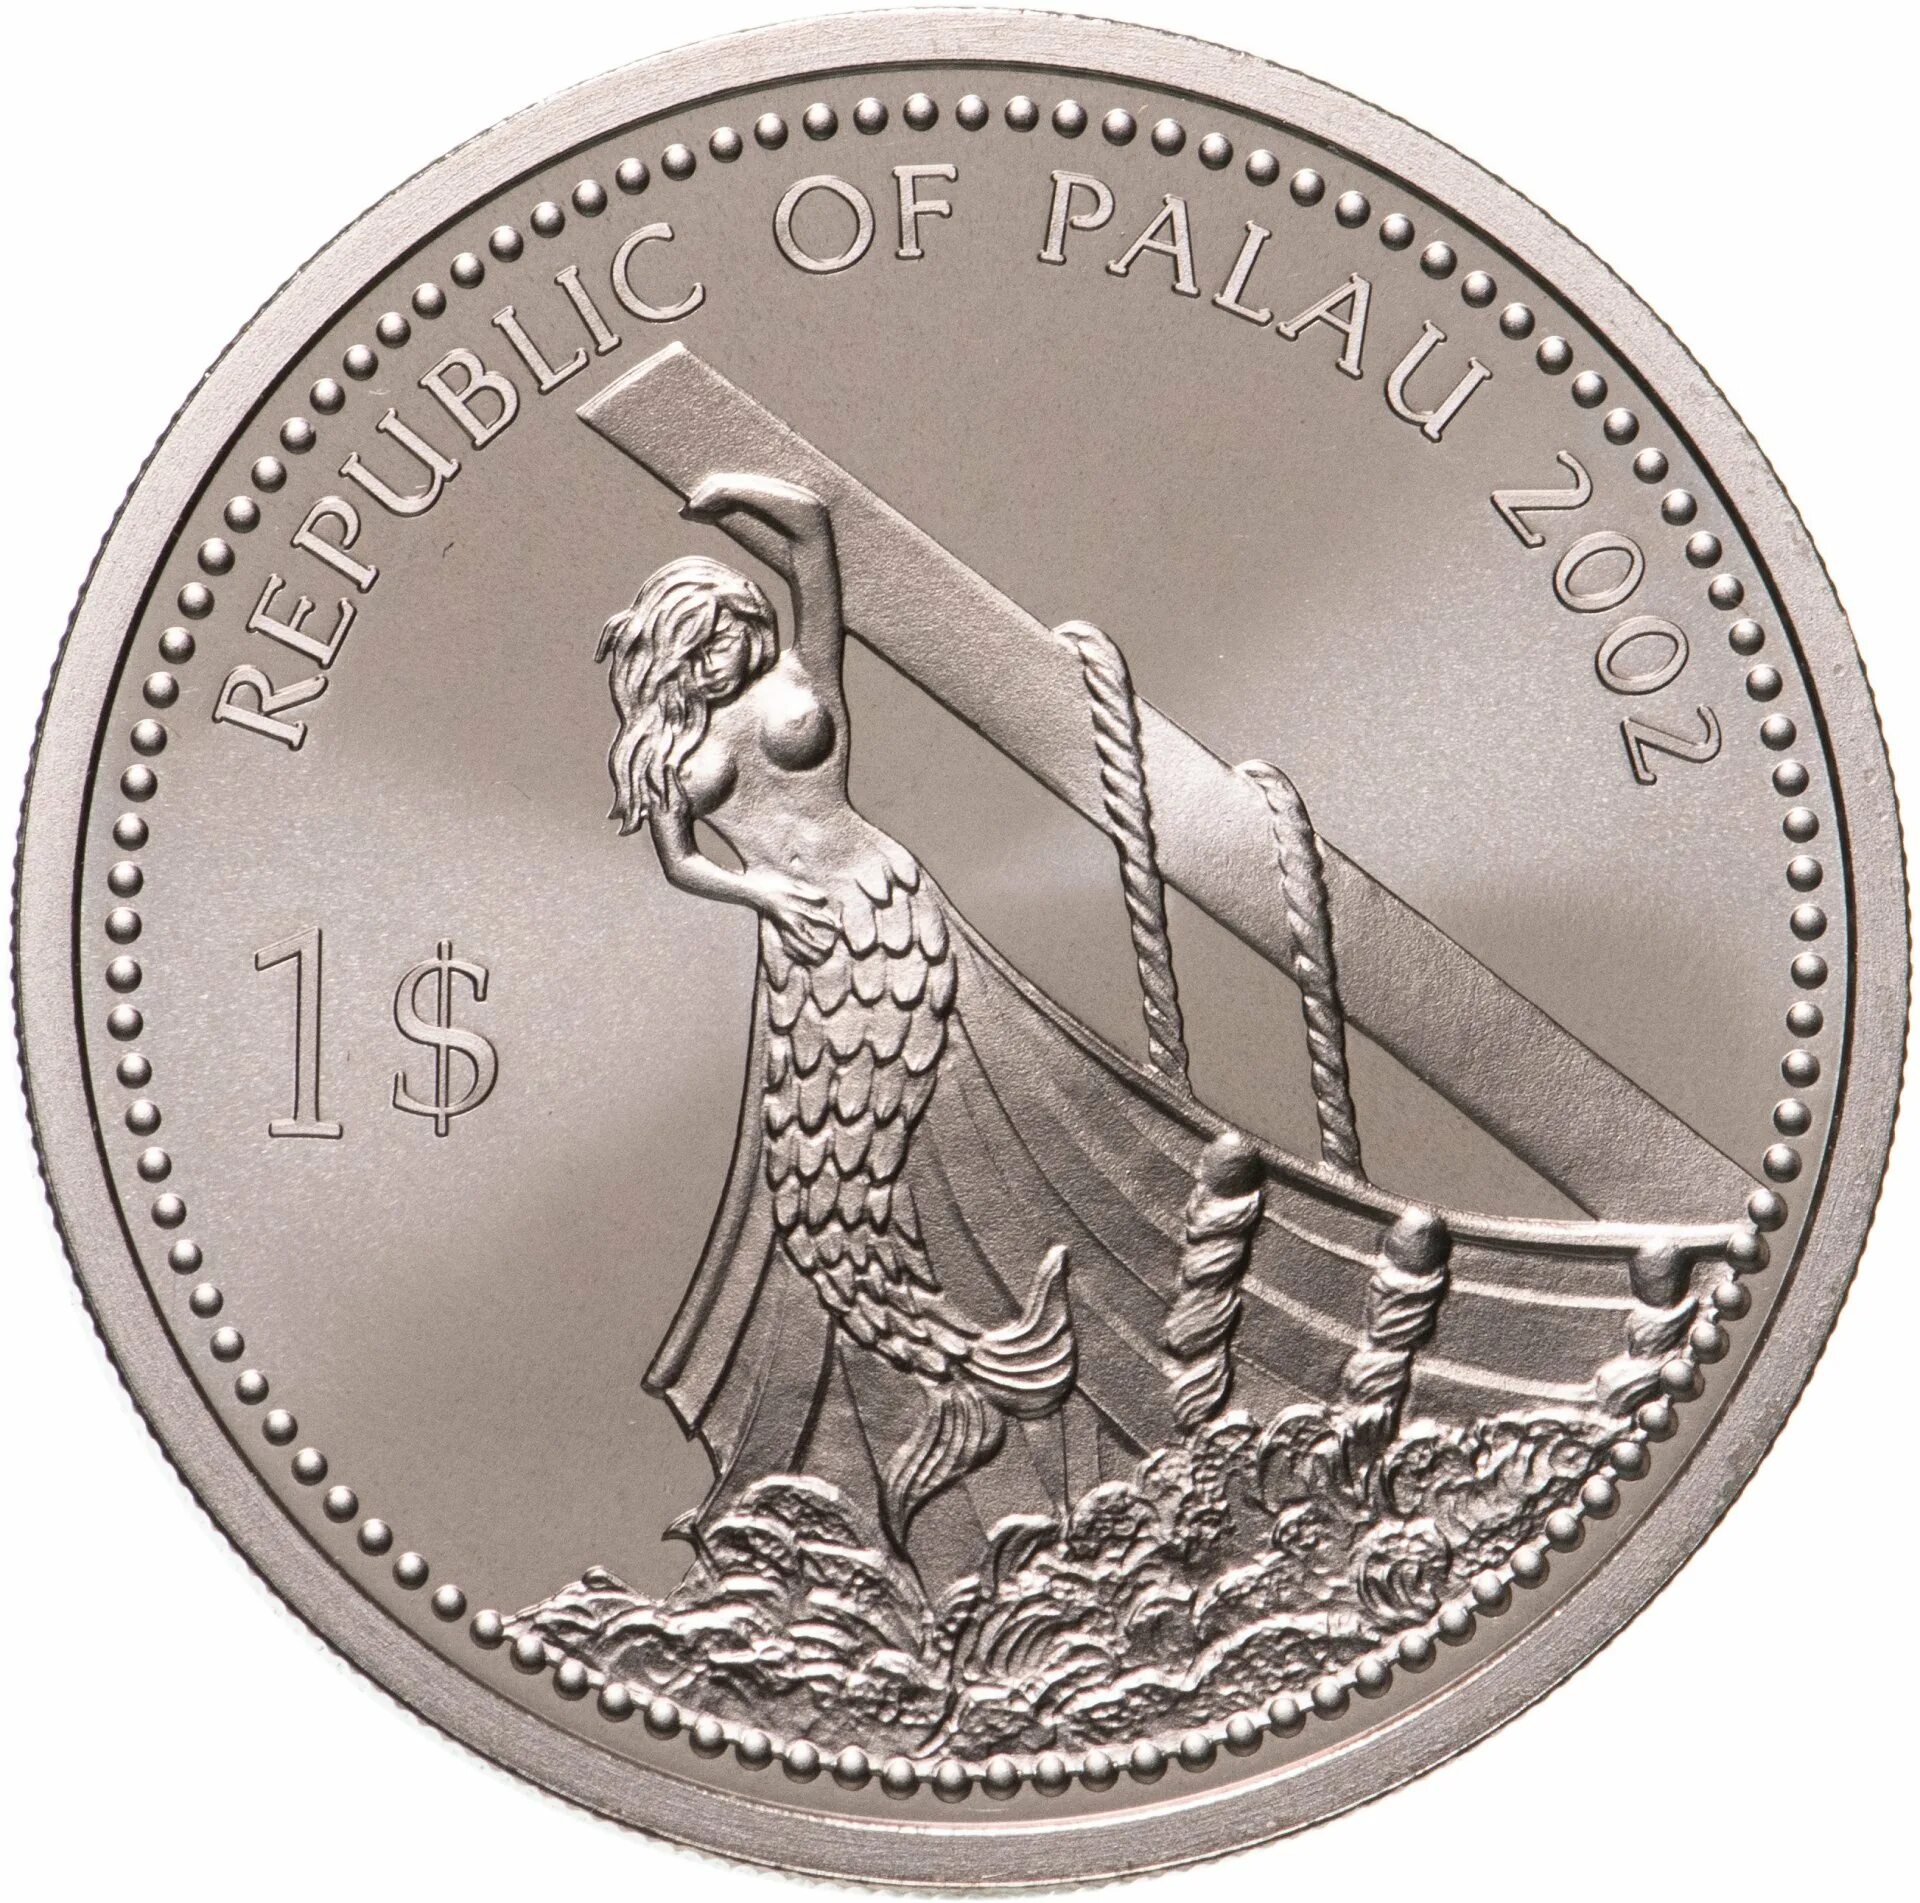 Монеты Палау. 1 Доллар монета. Монета Республики Палау. 1 Доллар коллекция монет. 2002 долларов в рублях